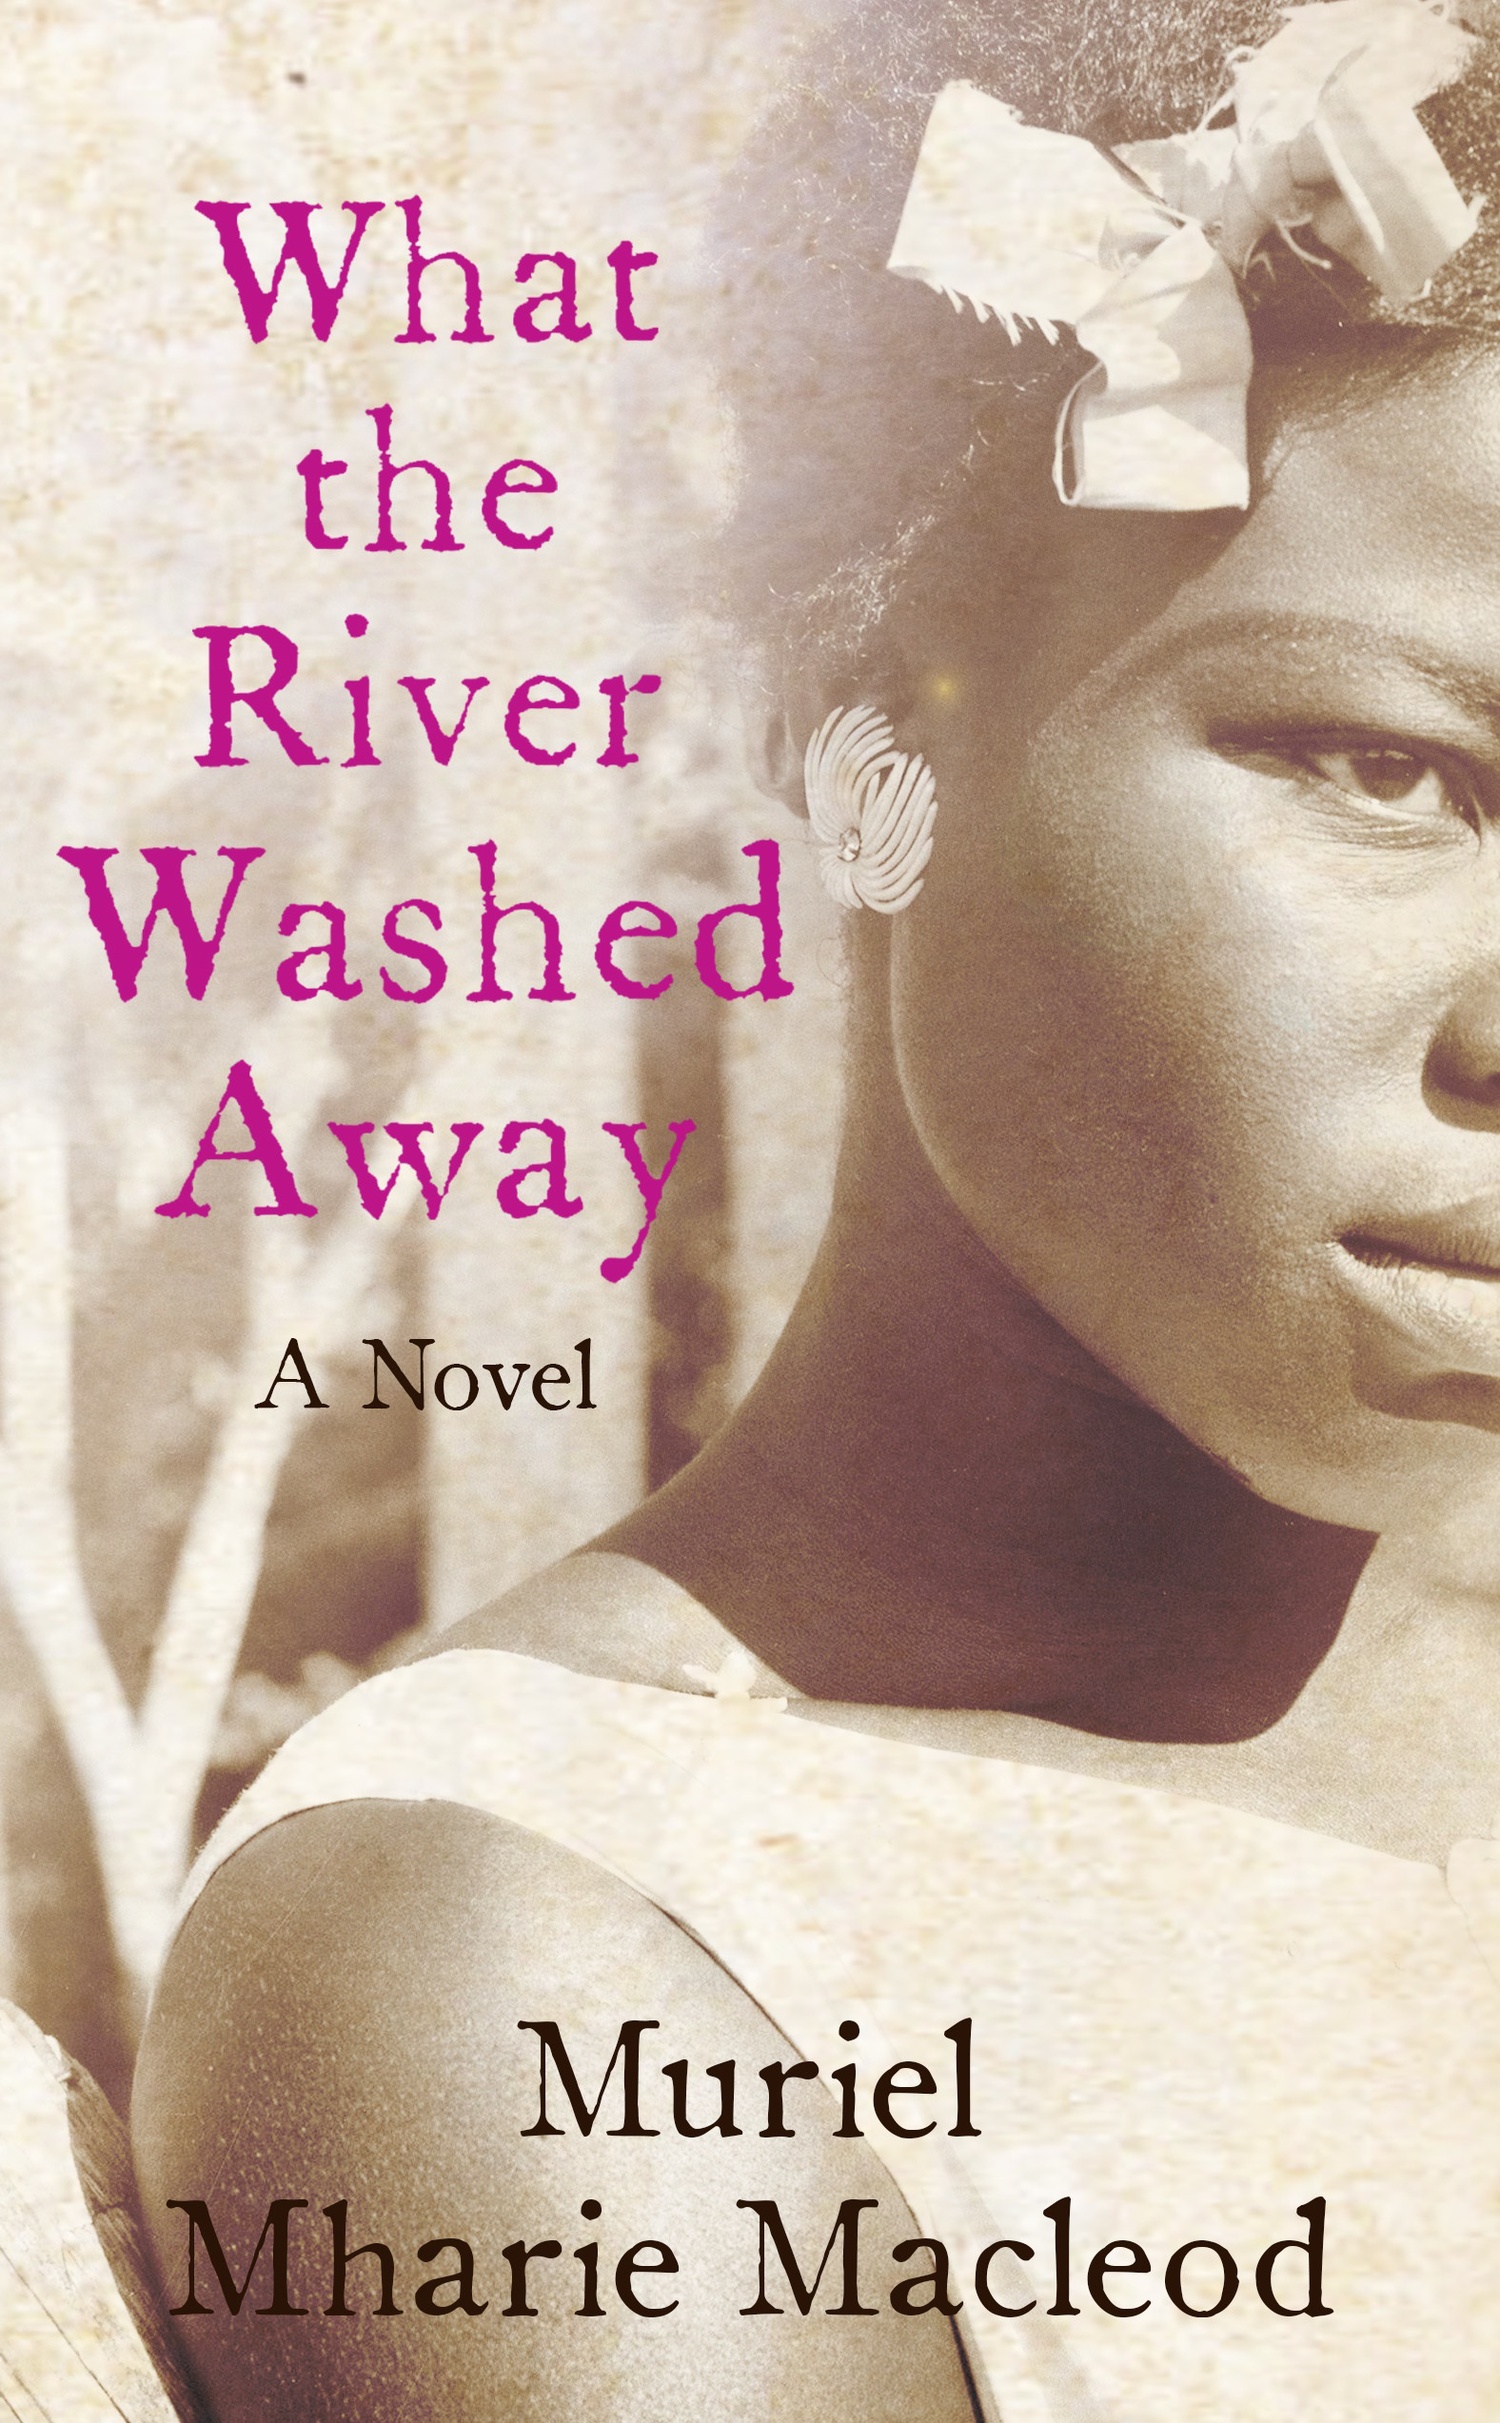 Wash away. The book of Night woman Marlon James. What the River knows книга на русском купить. Make him away